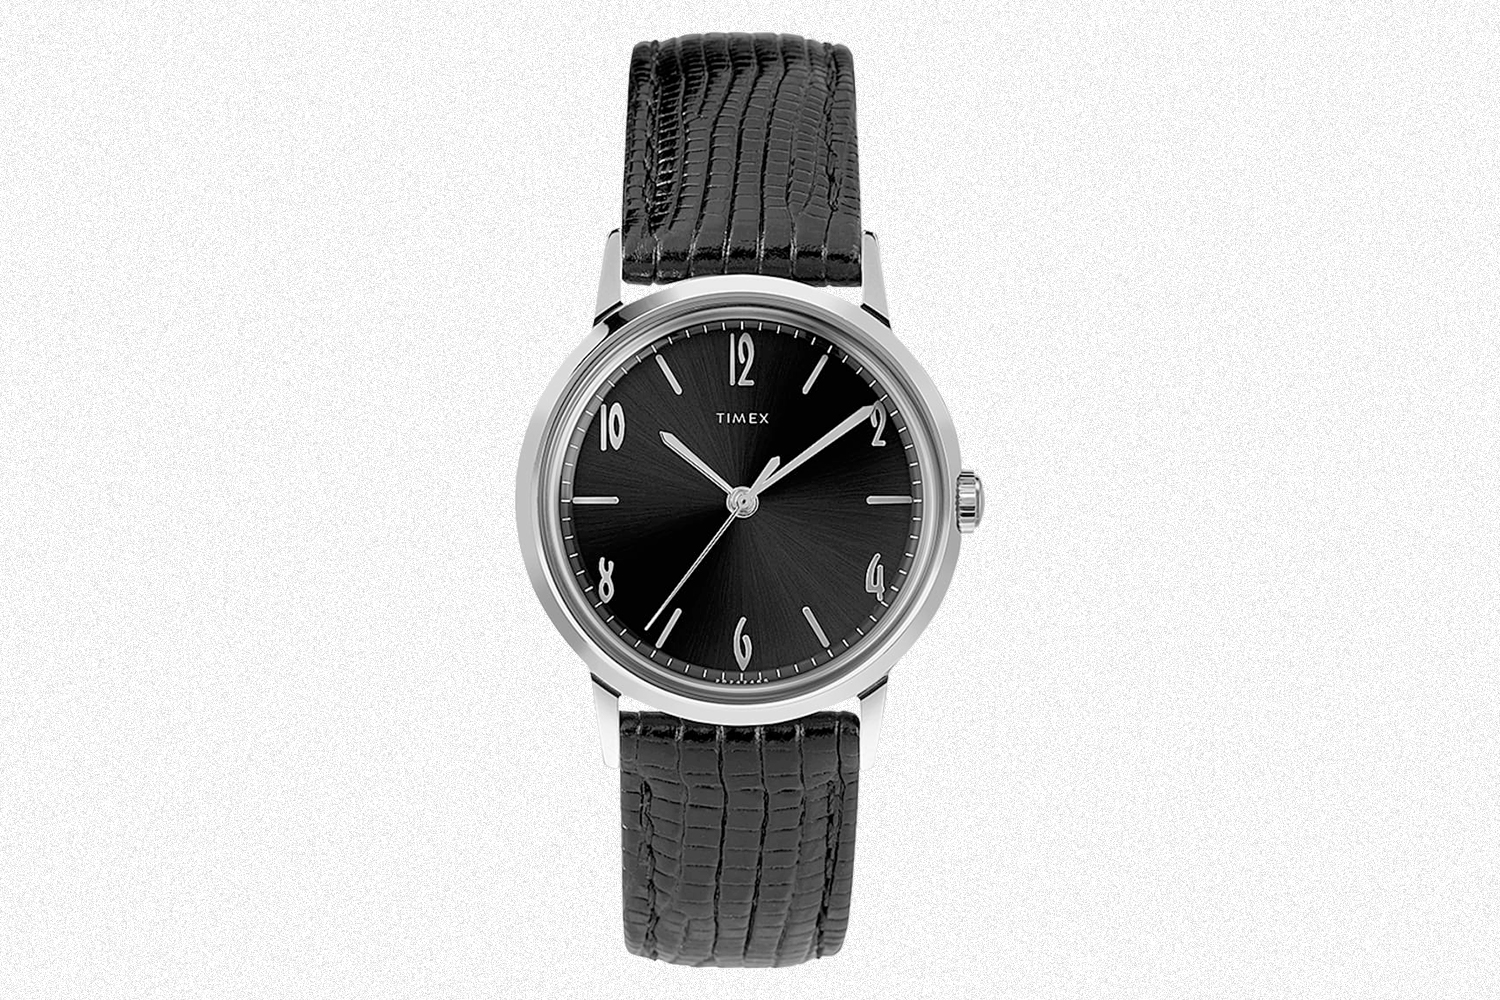 The Timex Marlin Hand-Wound Watch